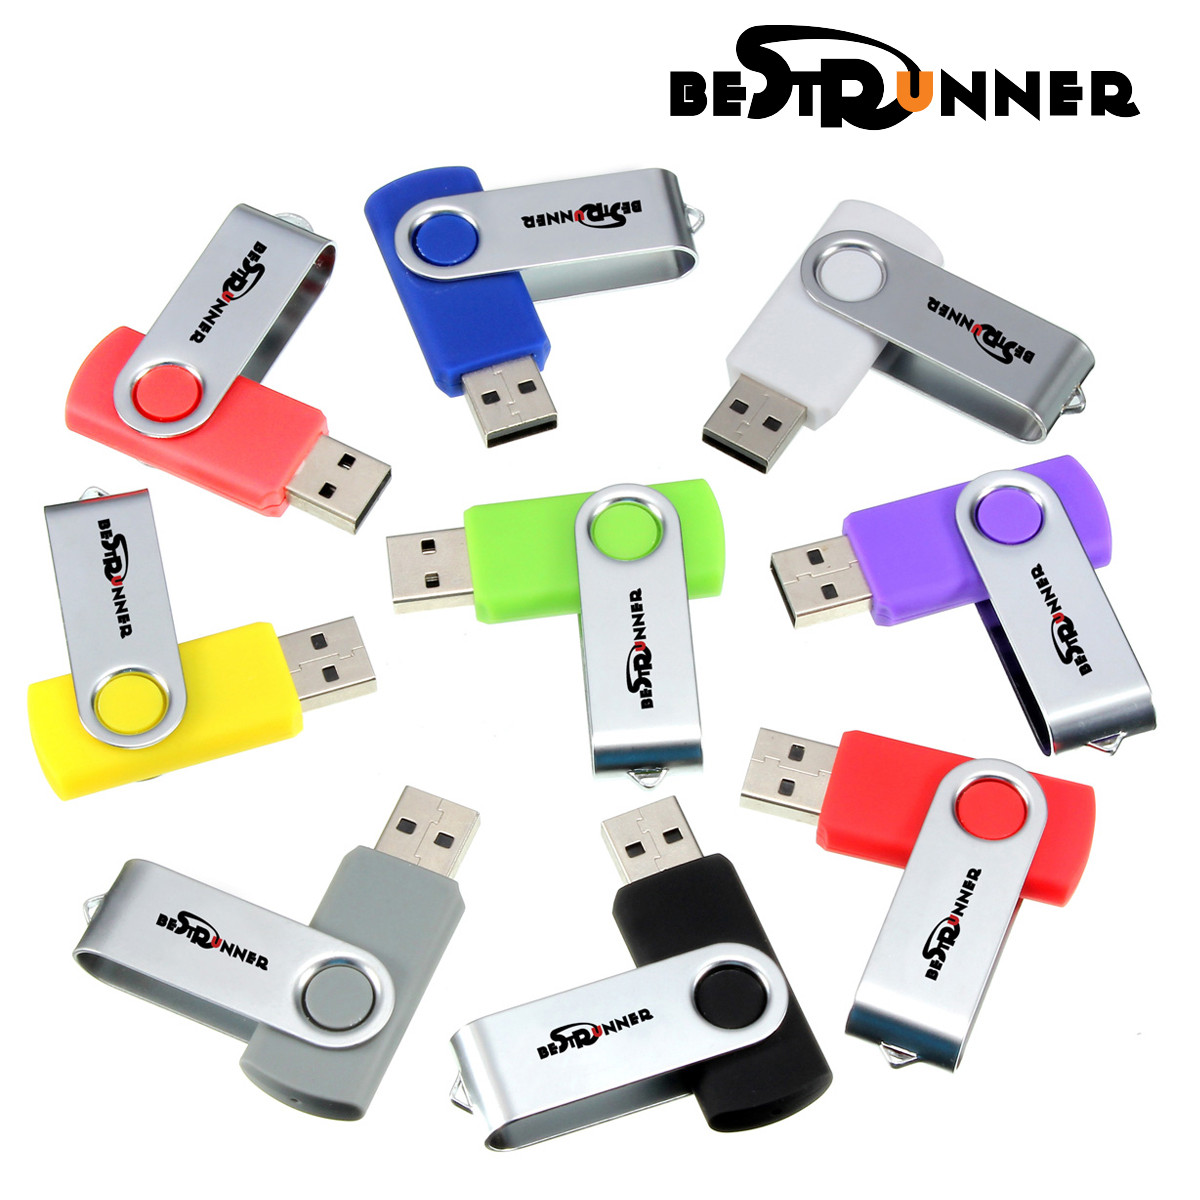 Bestrunner 8GB Foldable USB 2.0 Flash Drive Thumbstick Pen Drive Memory U Disk 22